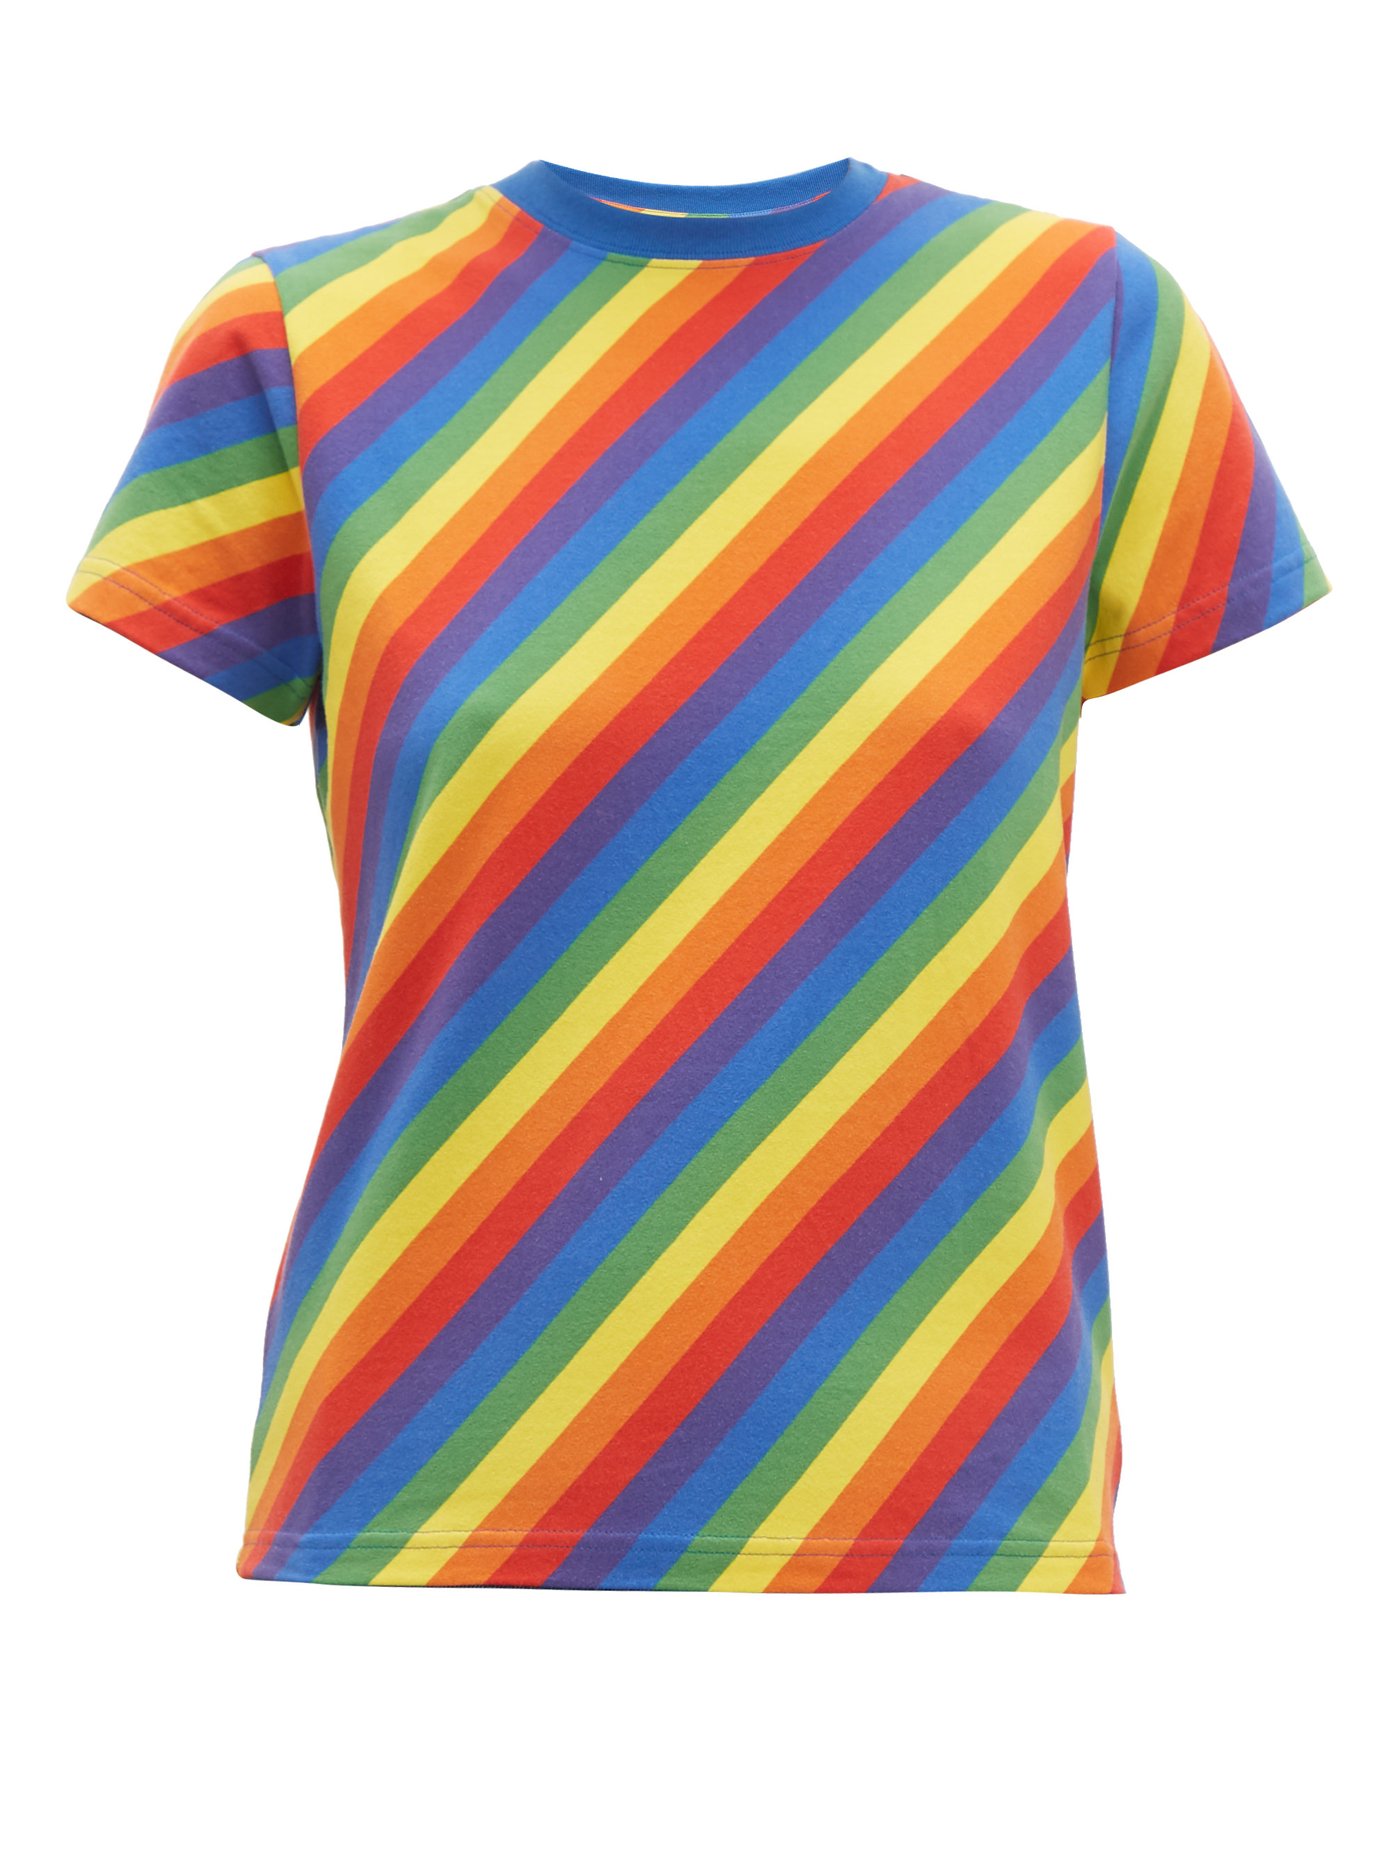 balenciaga rainbow t shirt